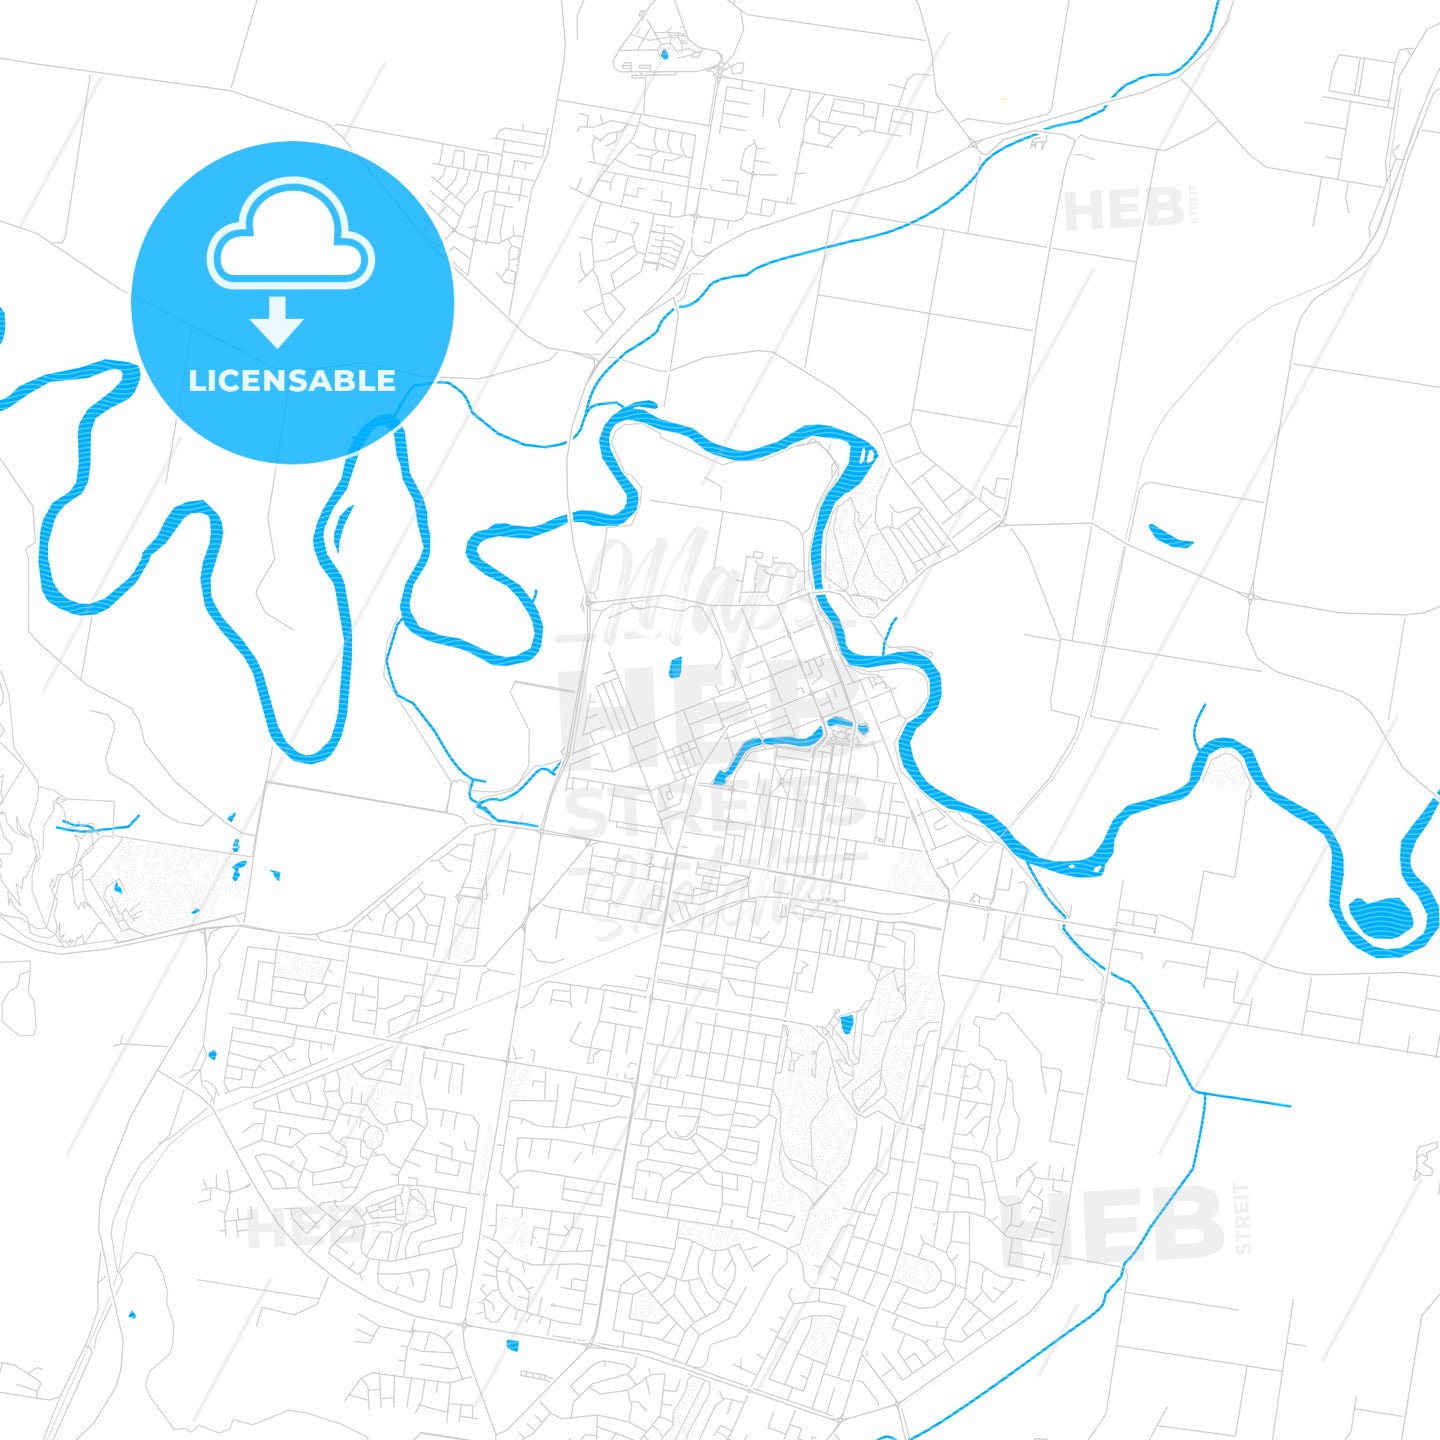 Wagga Wagga, Australia PDF vector map with water in focus